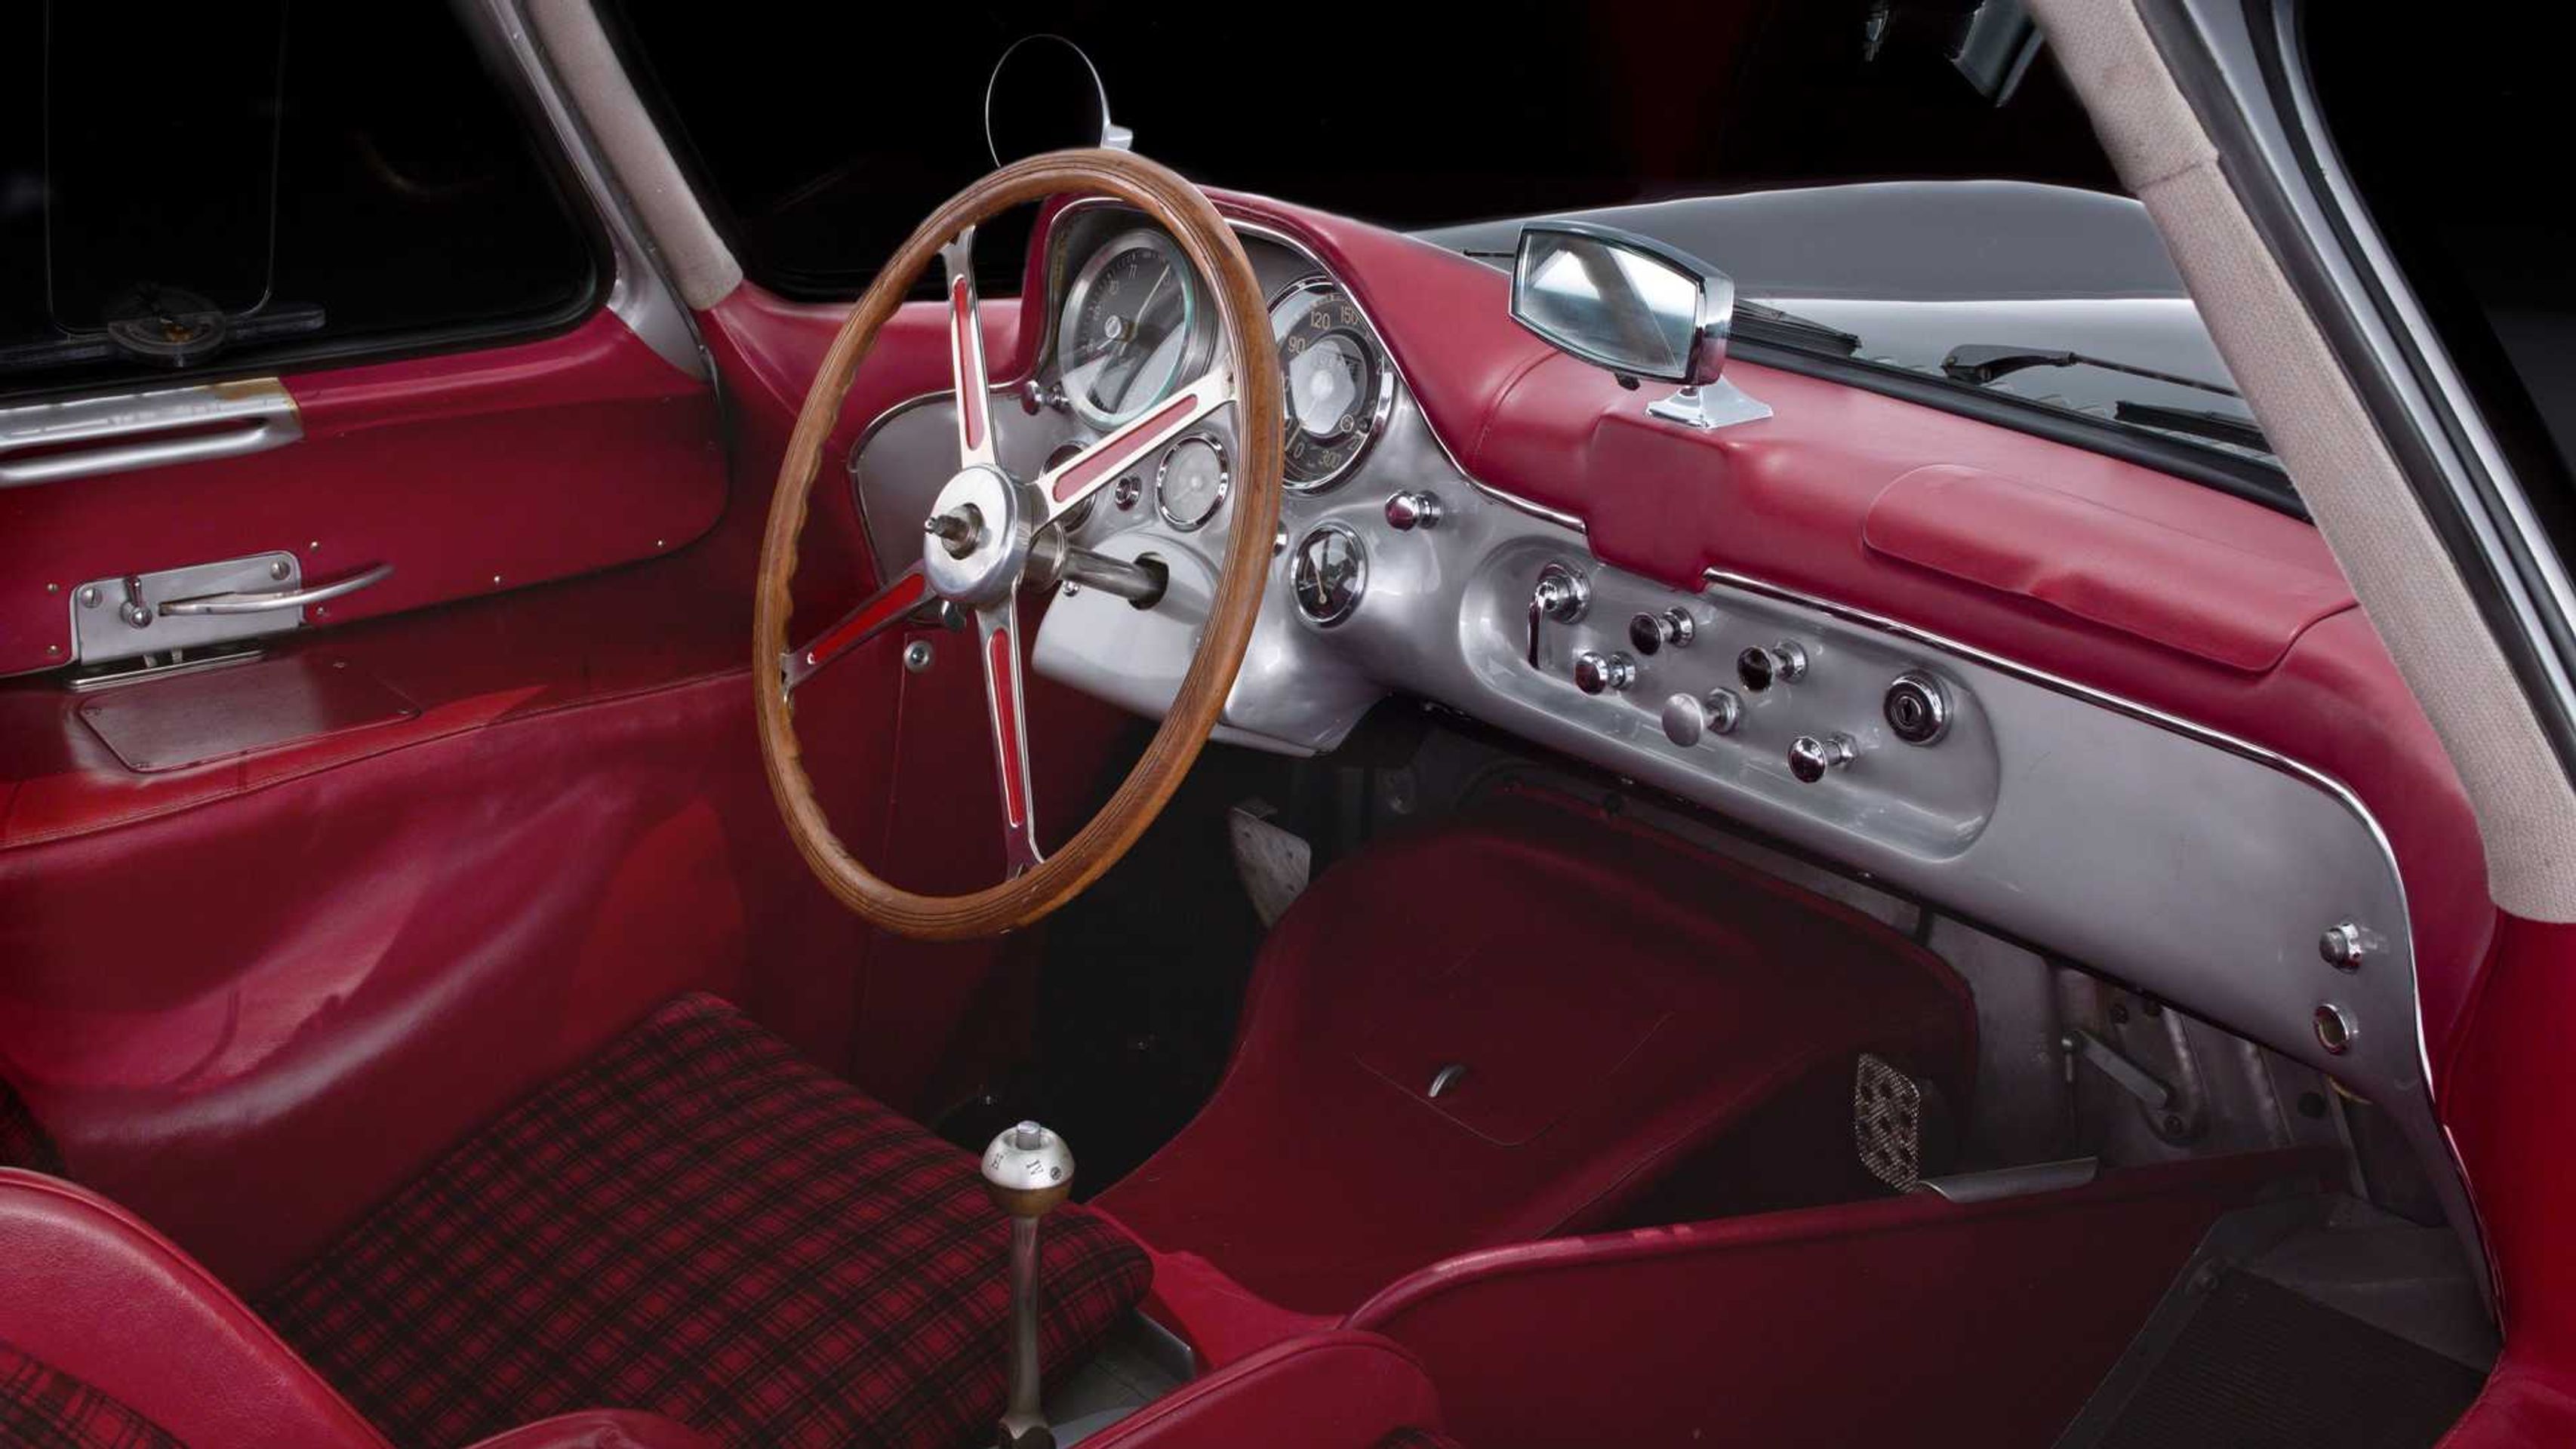 Mercedes-Benz 300 SLR Uhlenhaut Coupe z roku 1955 - Nejdražší auto světa: 300 SLR Uhlenhaut Coupe z roku 1955 (4/20)